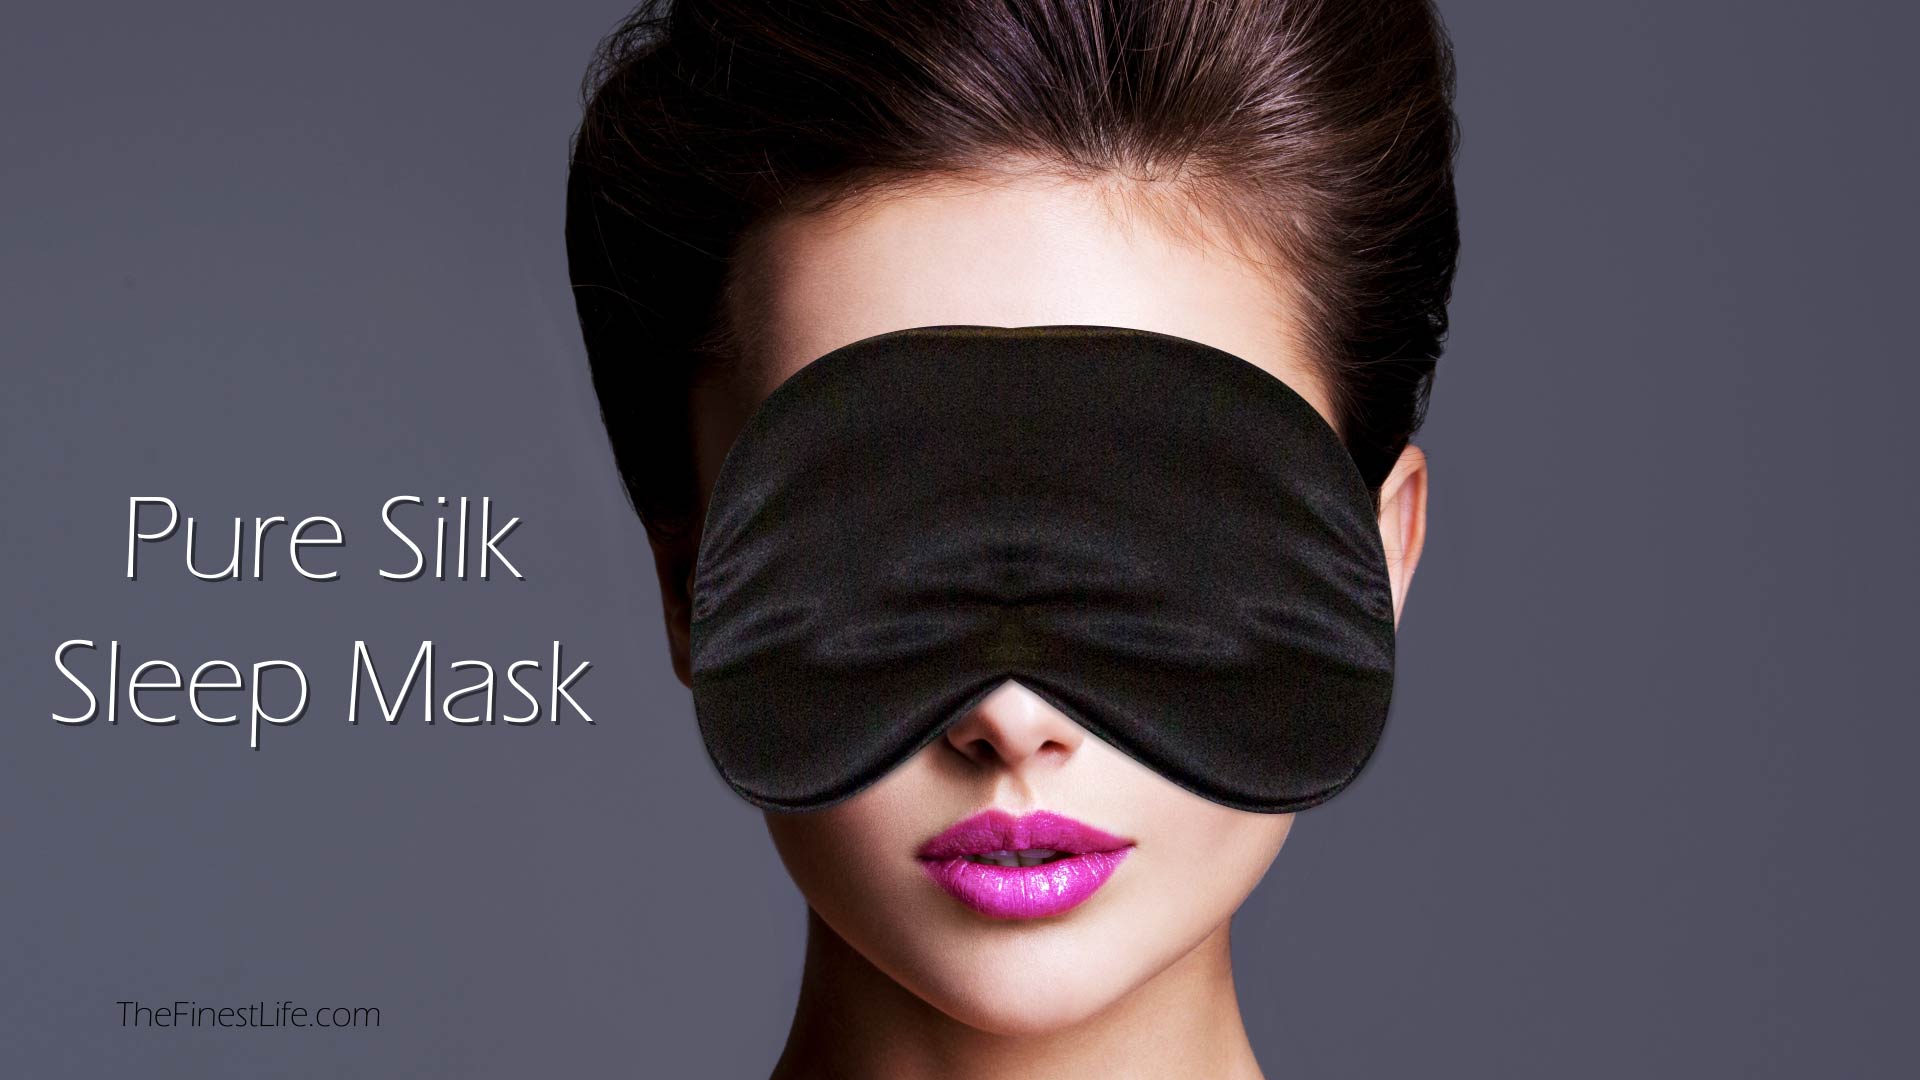 Premium Silk Sleep Mask The Finest Life 7520